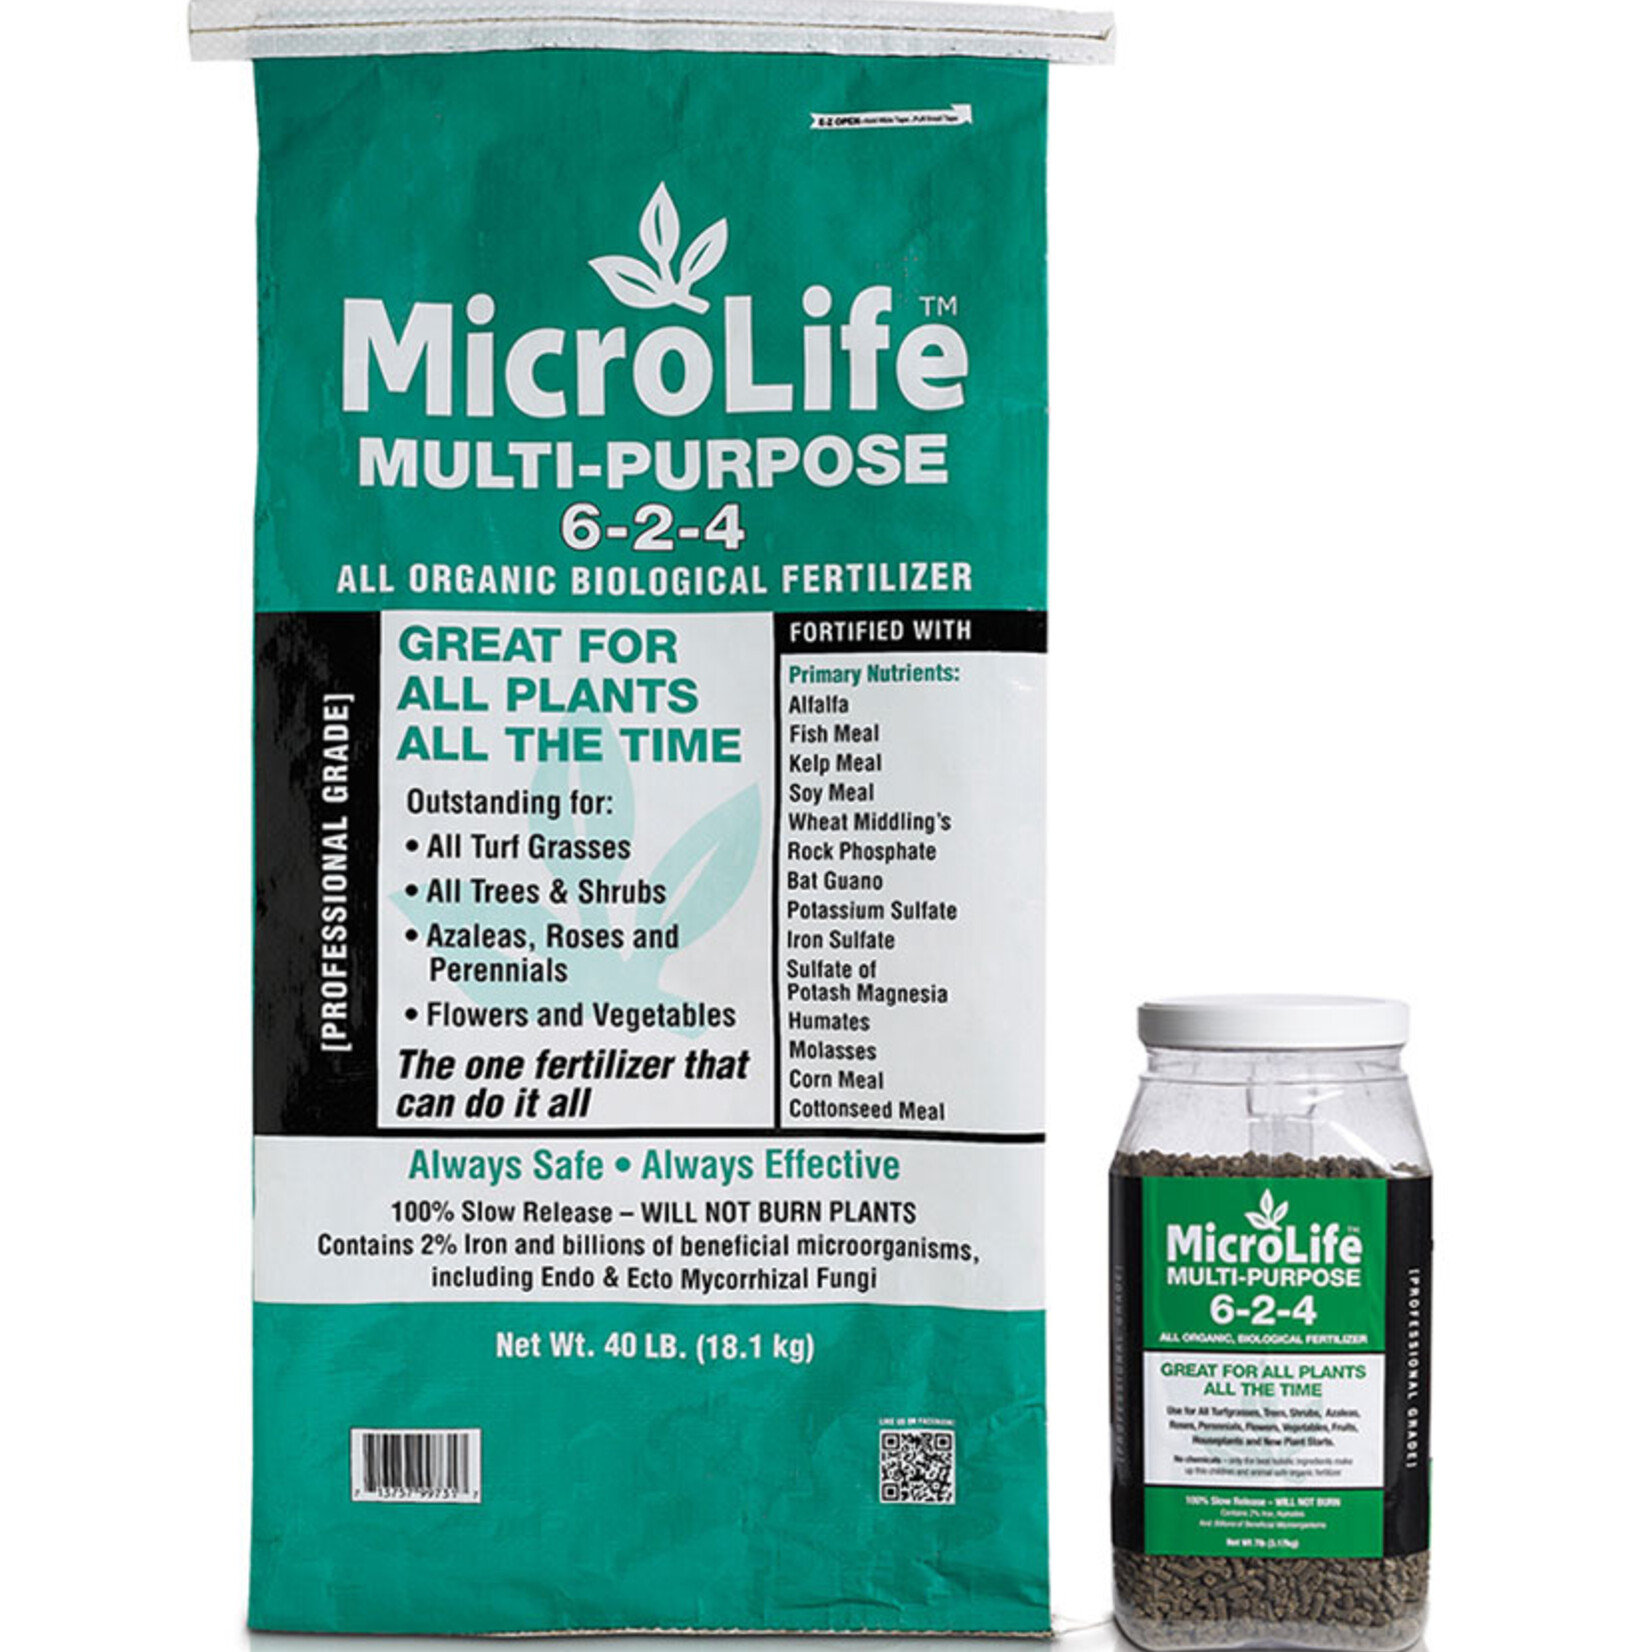 MicroLife 6-2-4 All Purpose 7 lb. jug